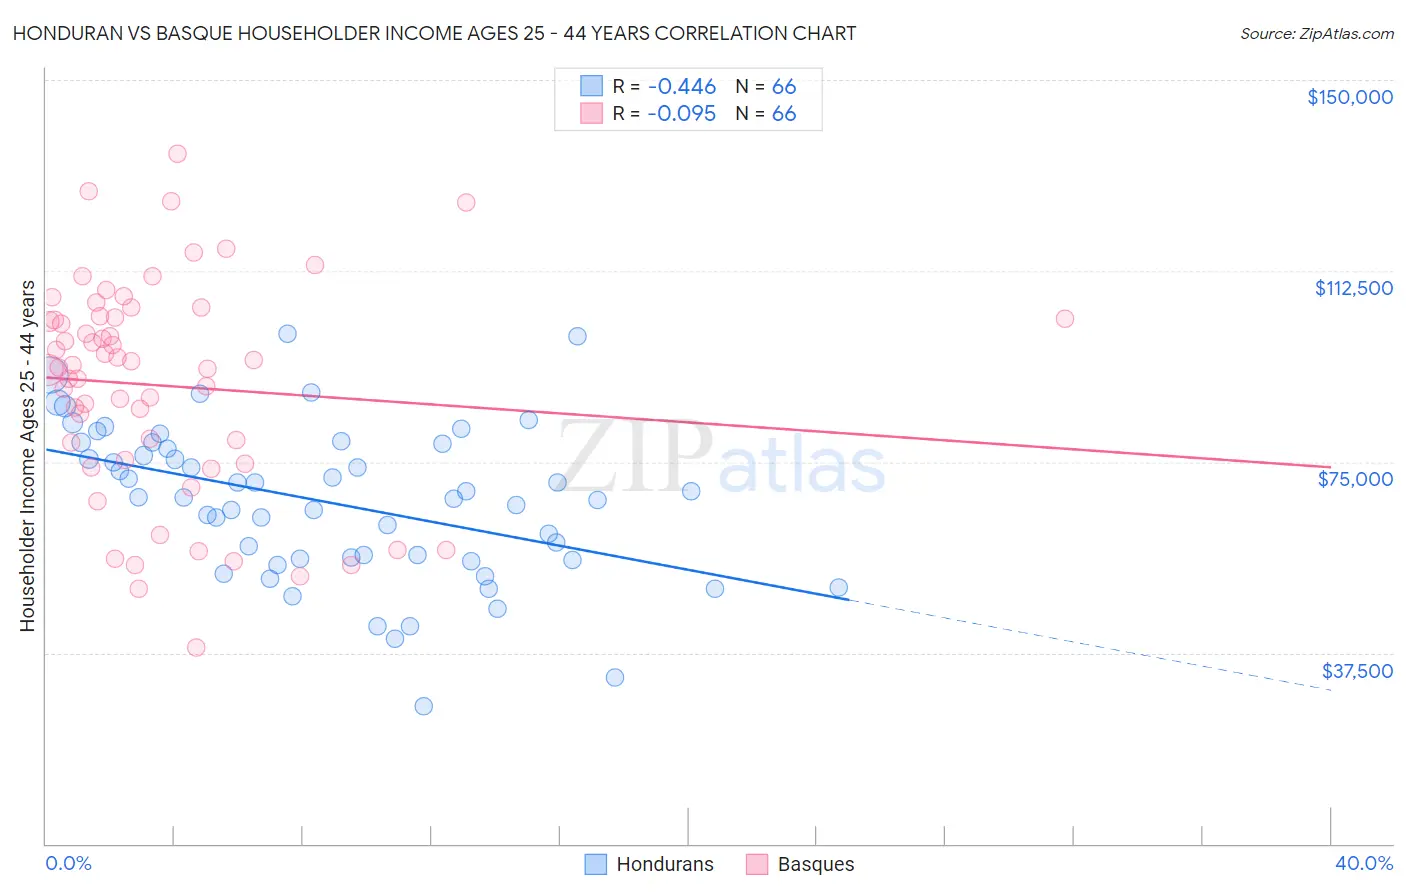 Honduran vs Basque Householder Income Ages 25 - 44 years